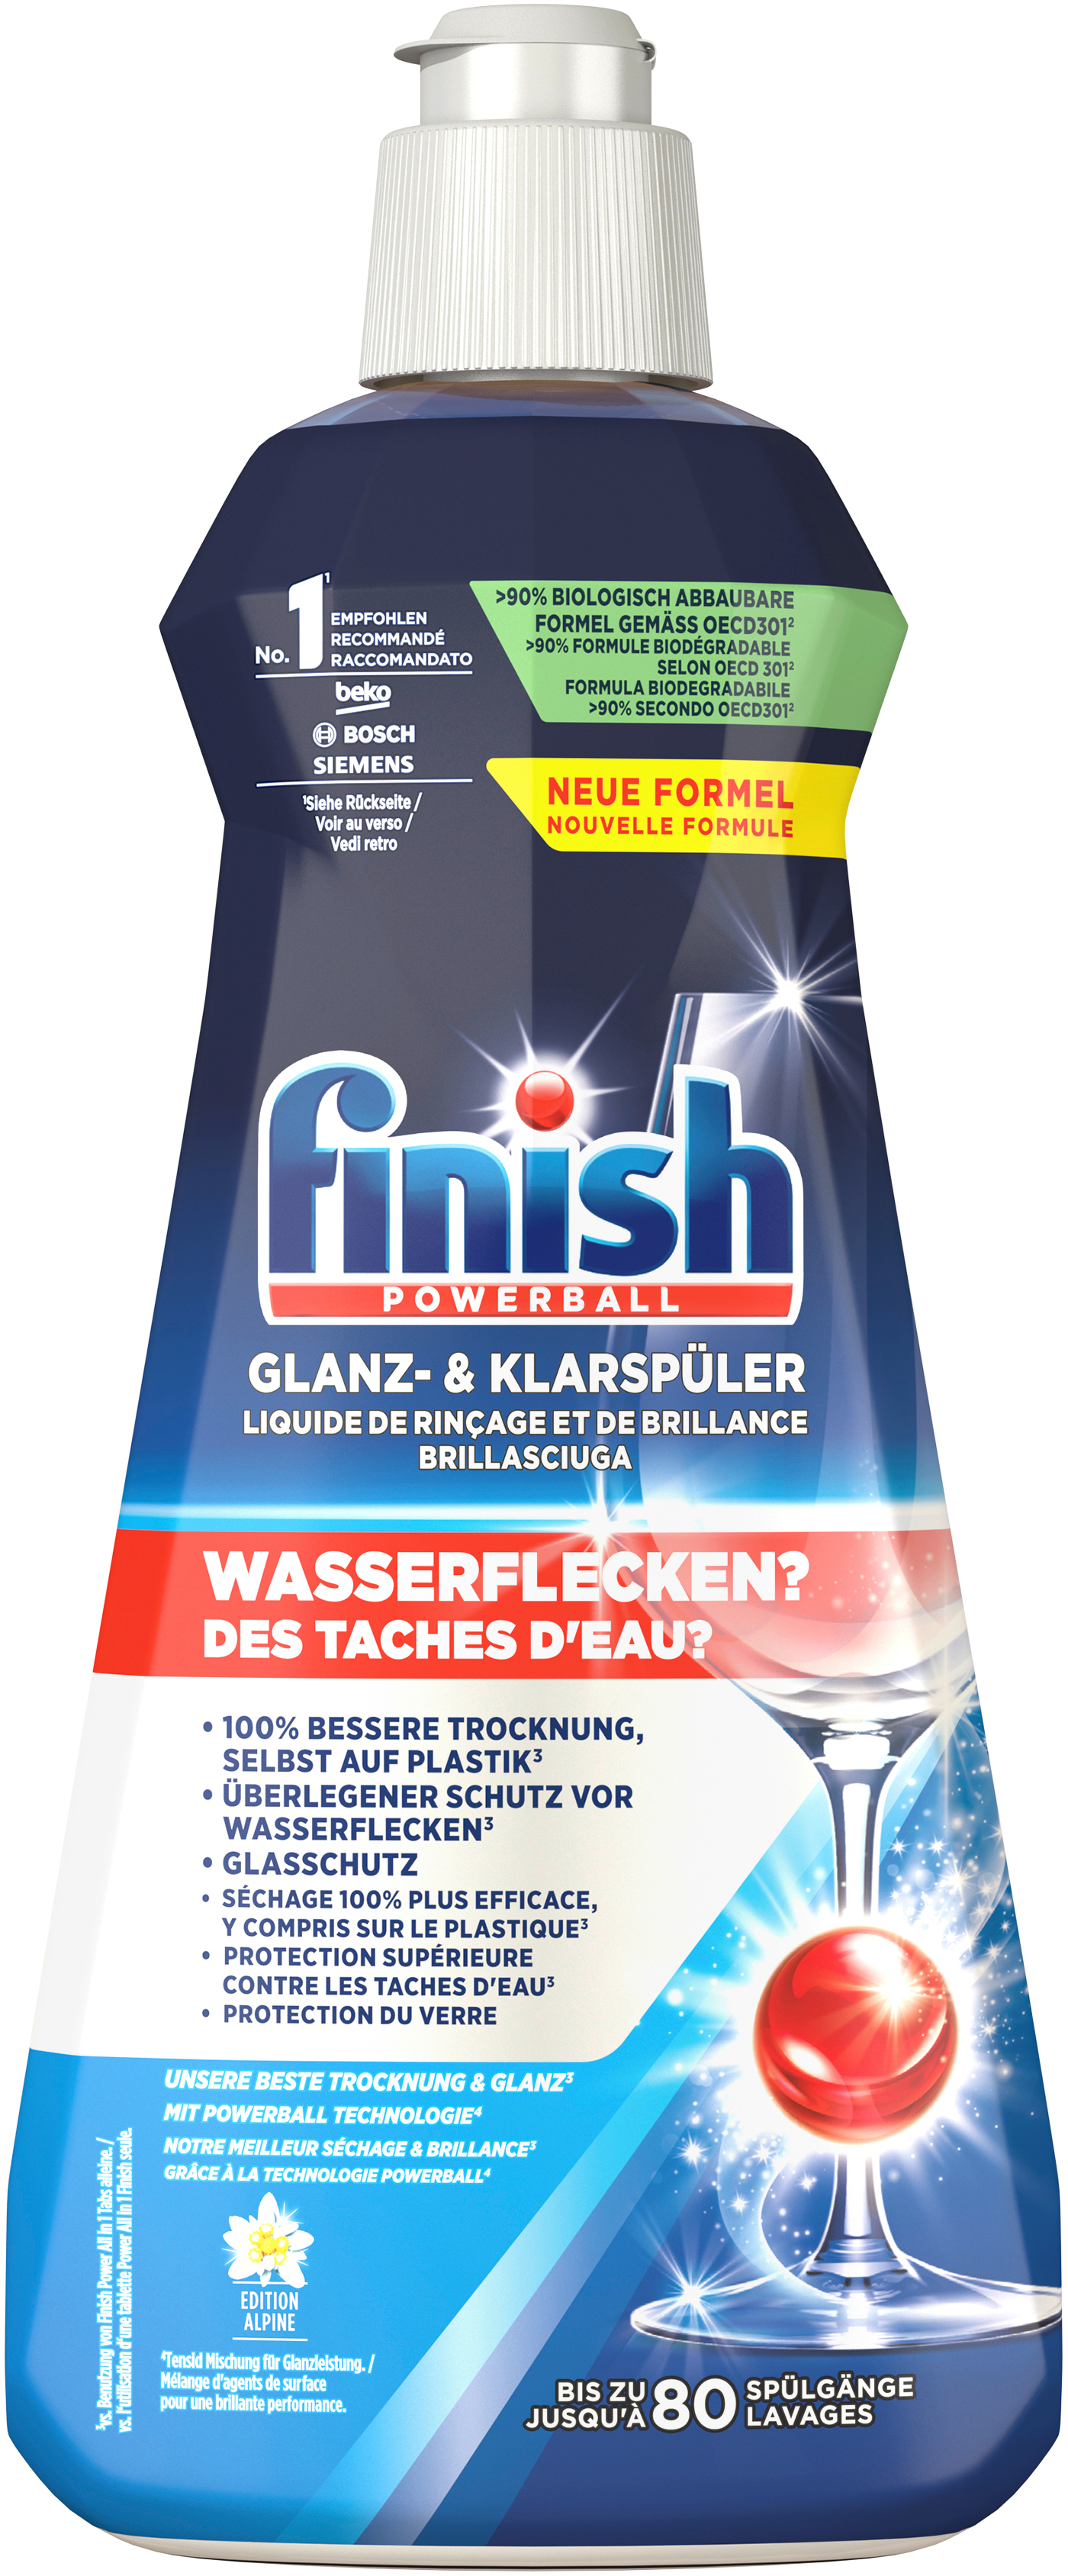 FINISH Produit brillant et rinçage 3247318 regular 400ml regular 400ml